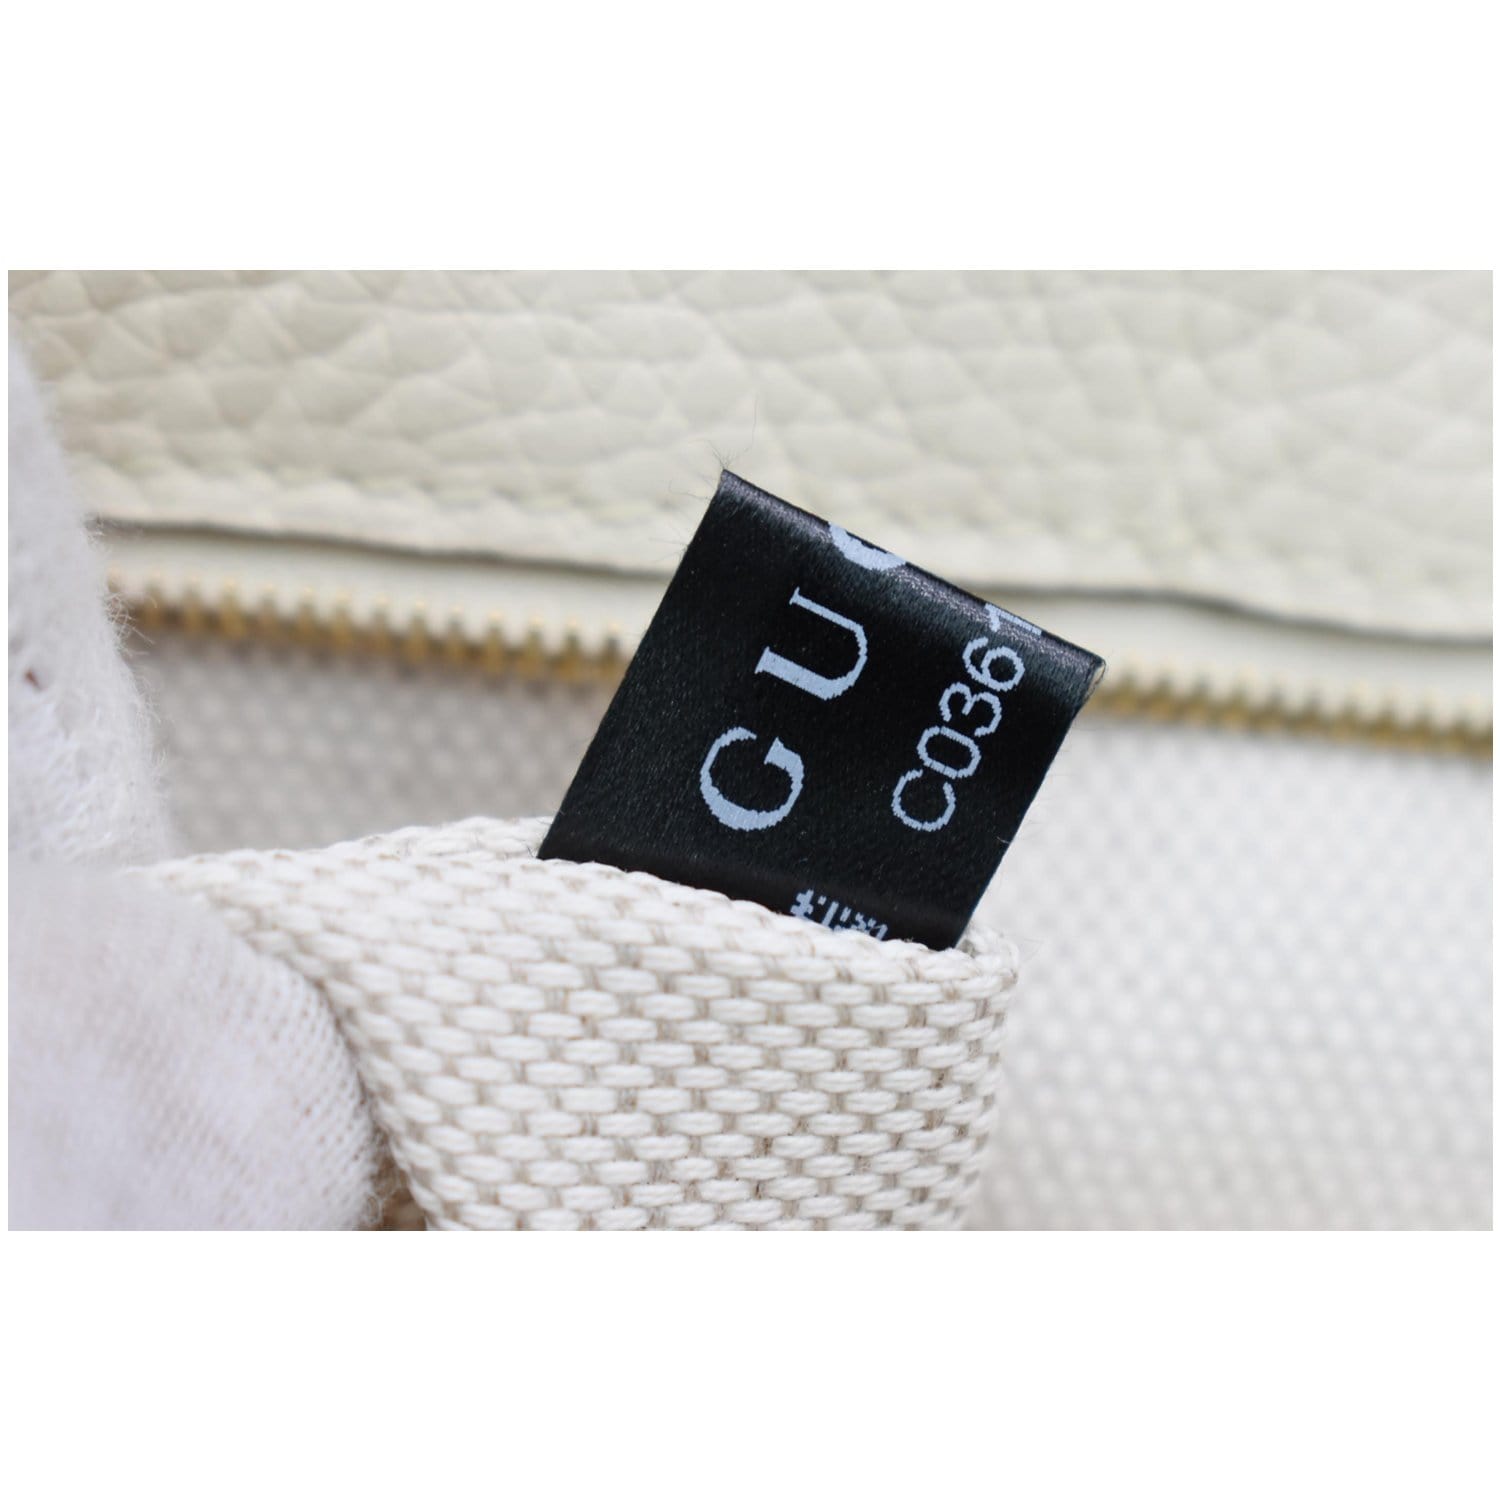 GUCCI Soho Chain Flap Leather Crossbody Bag White 536224